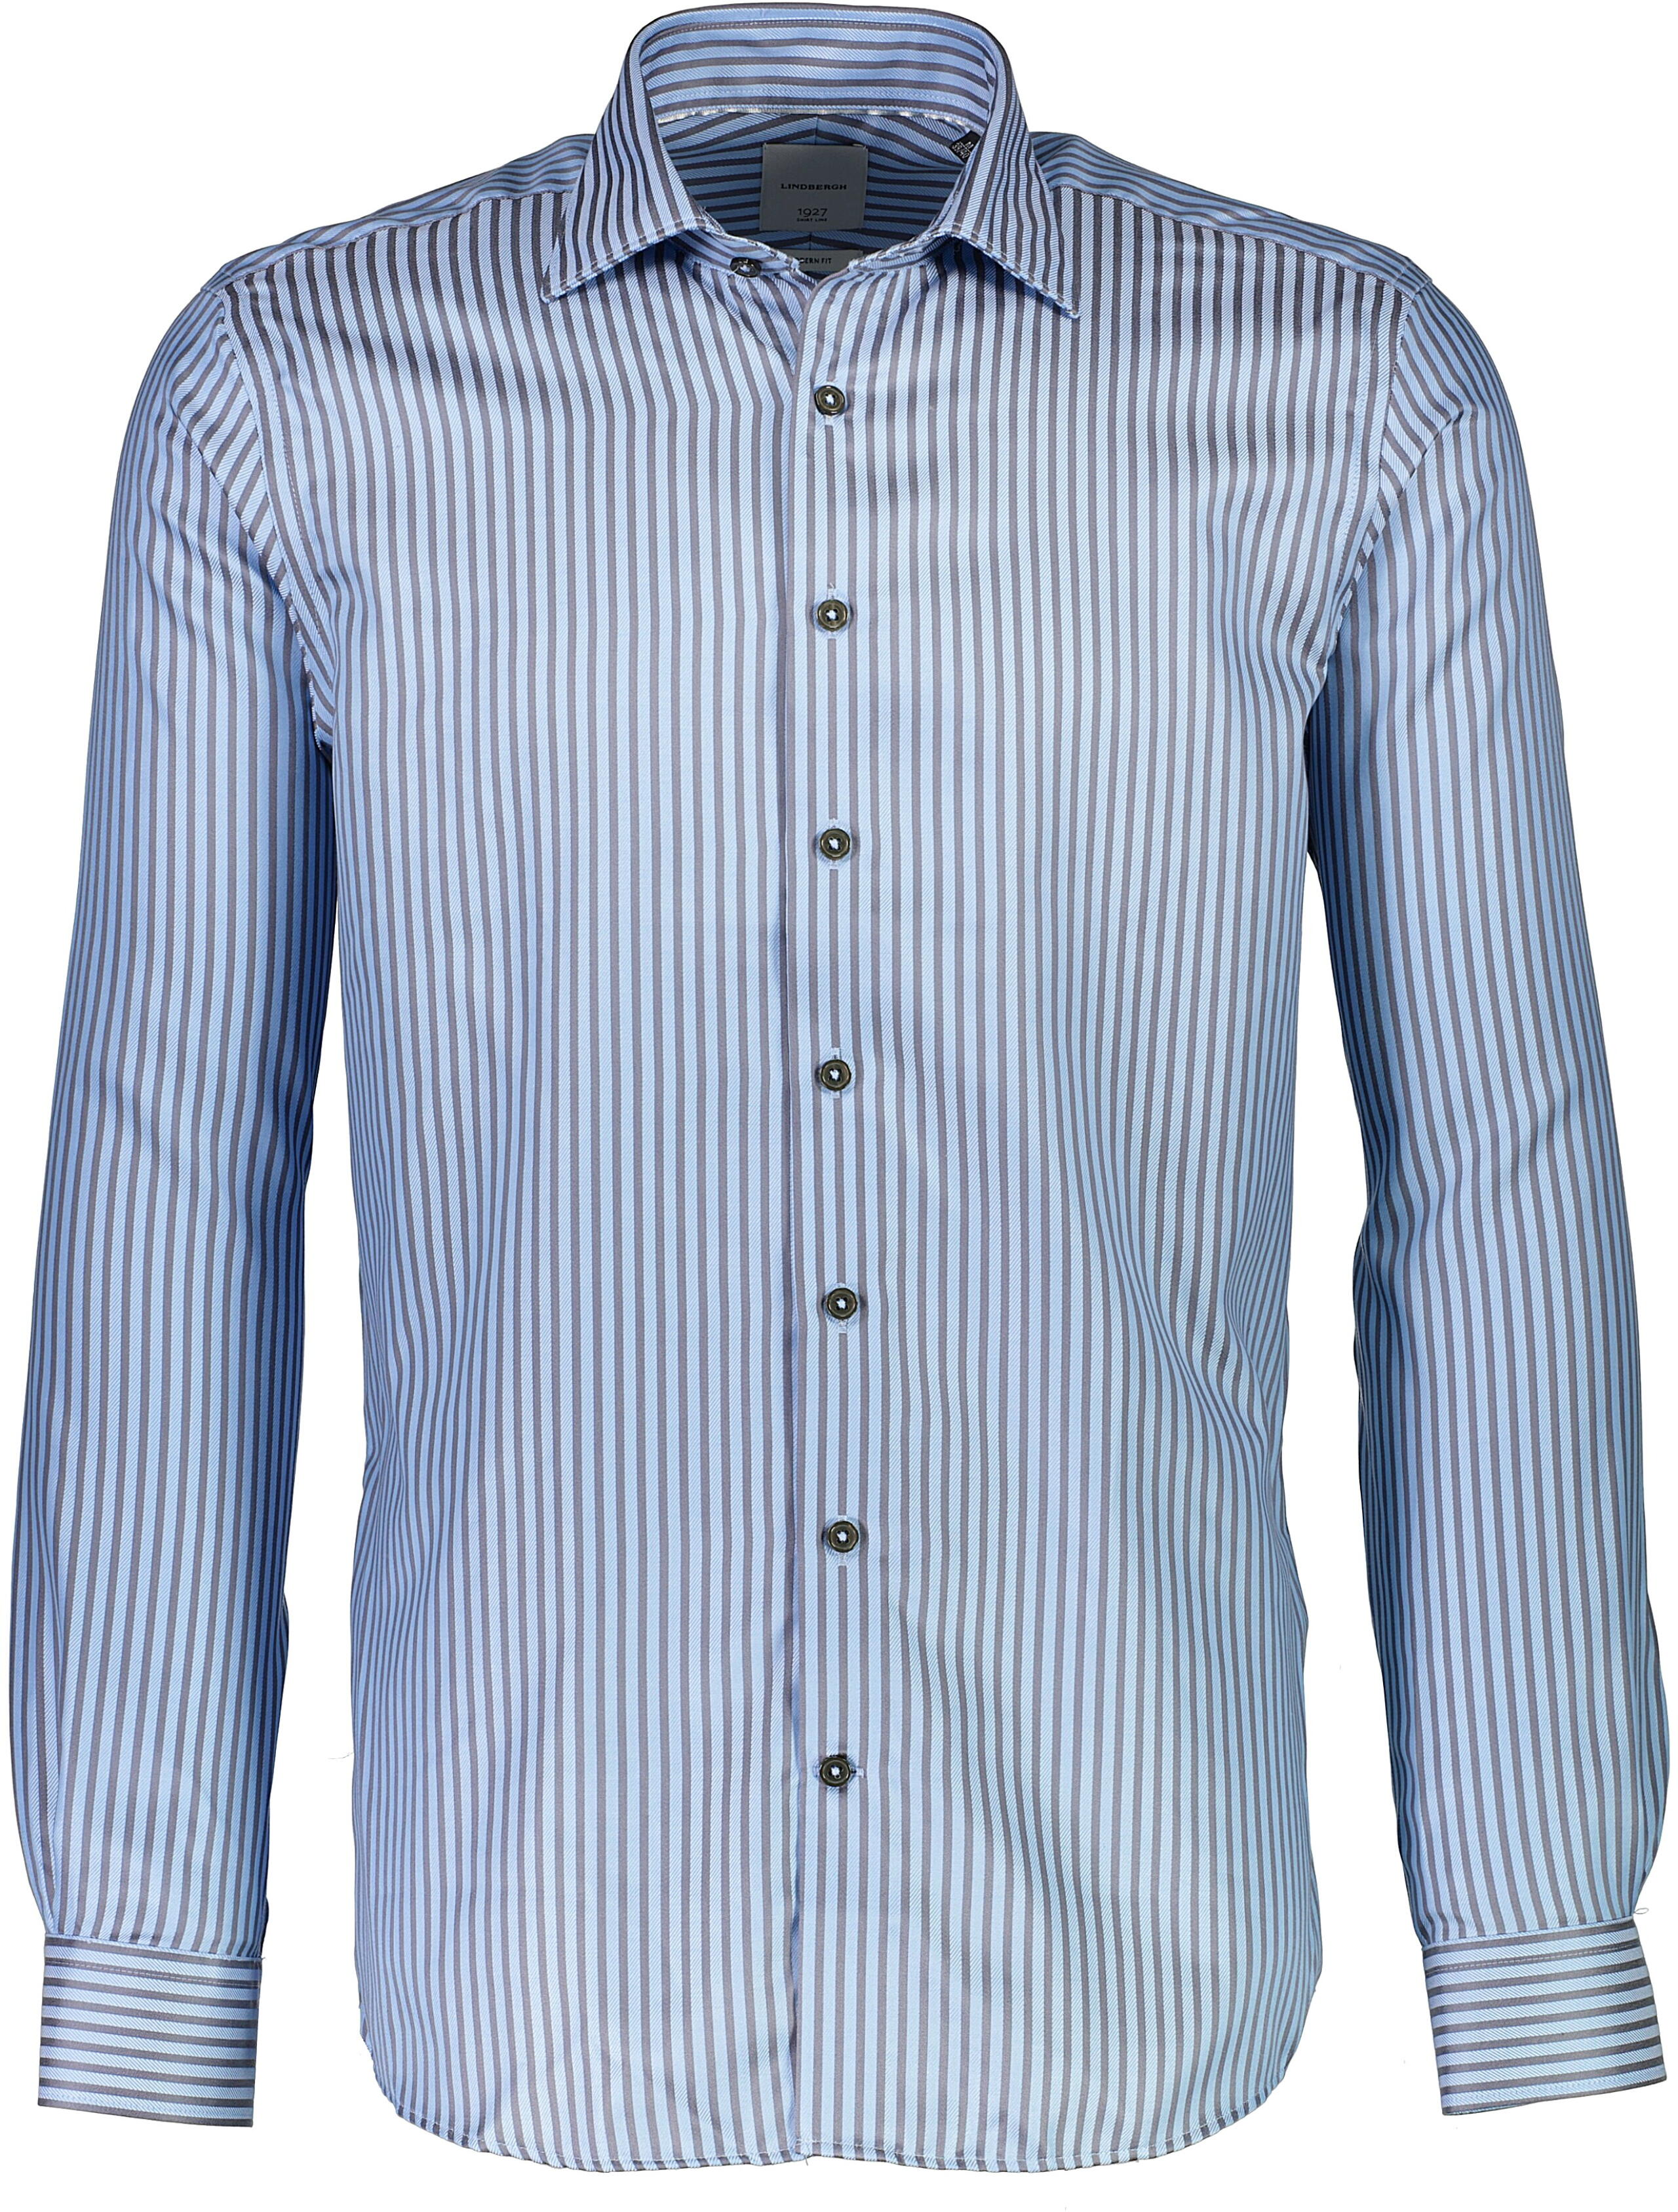 1927 Business casual shirt 30-247176